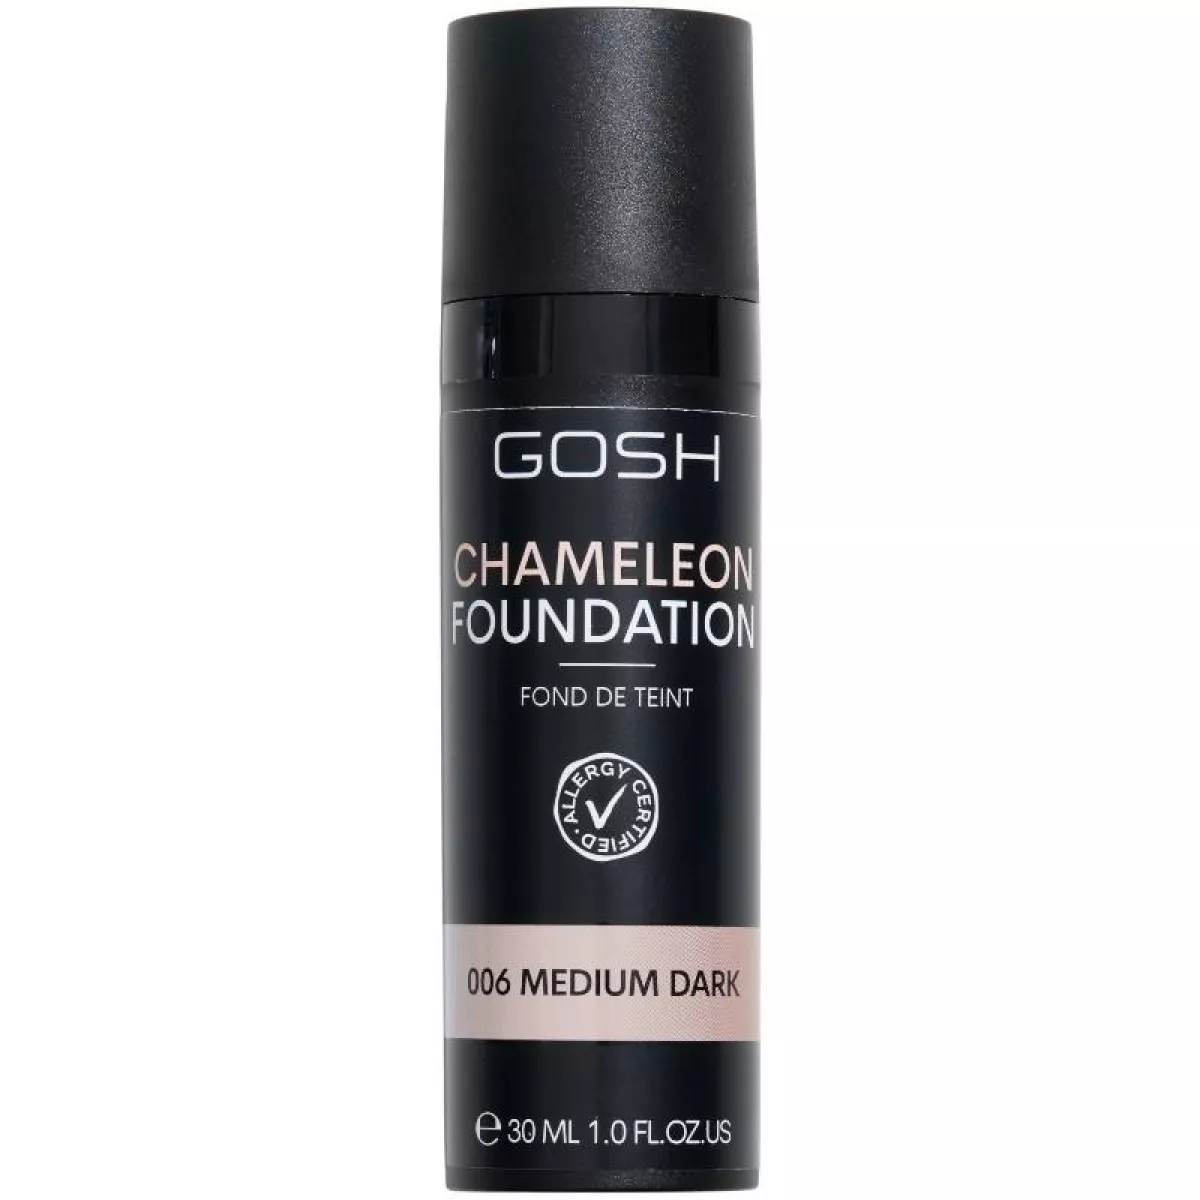 #1 - GOSH Chameleon Foundation 30 ml - 006 Medium Dark (U) (U)